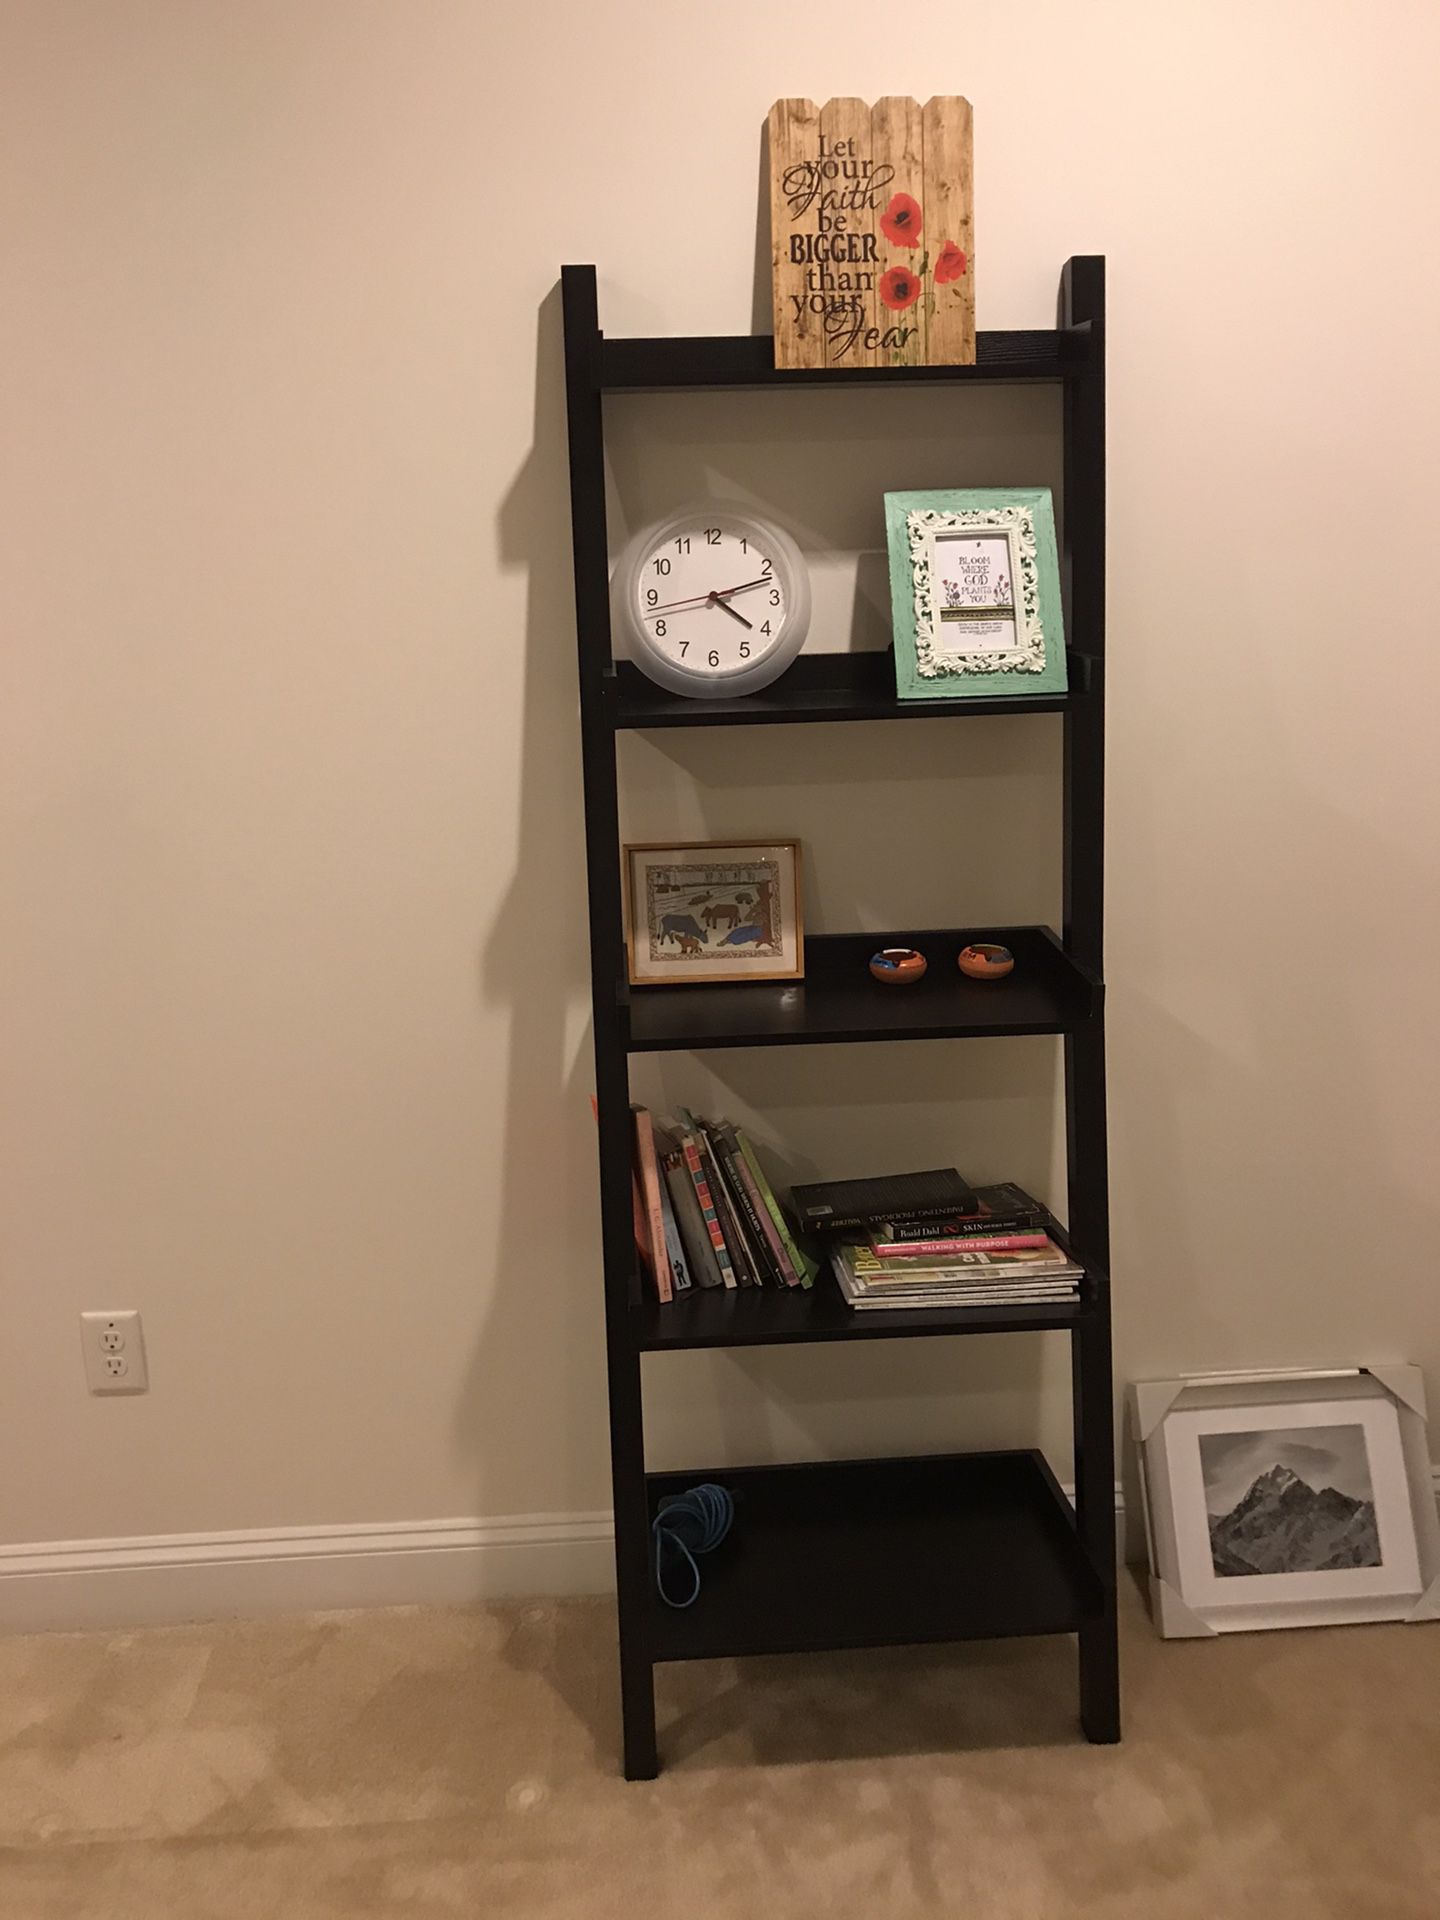 Leaning book shelf. 6ft x 2 ft. Like new. $40